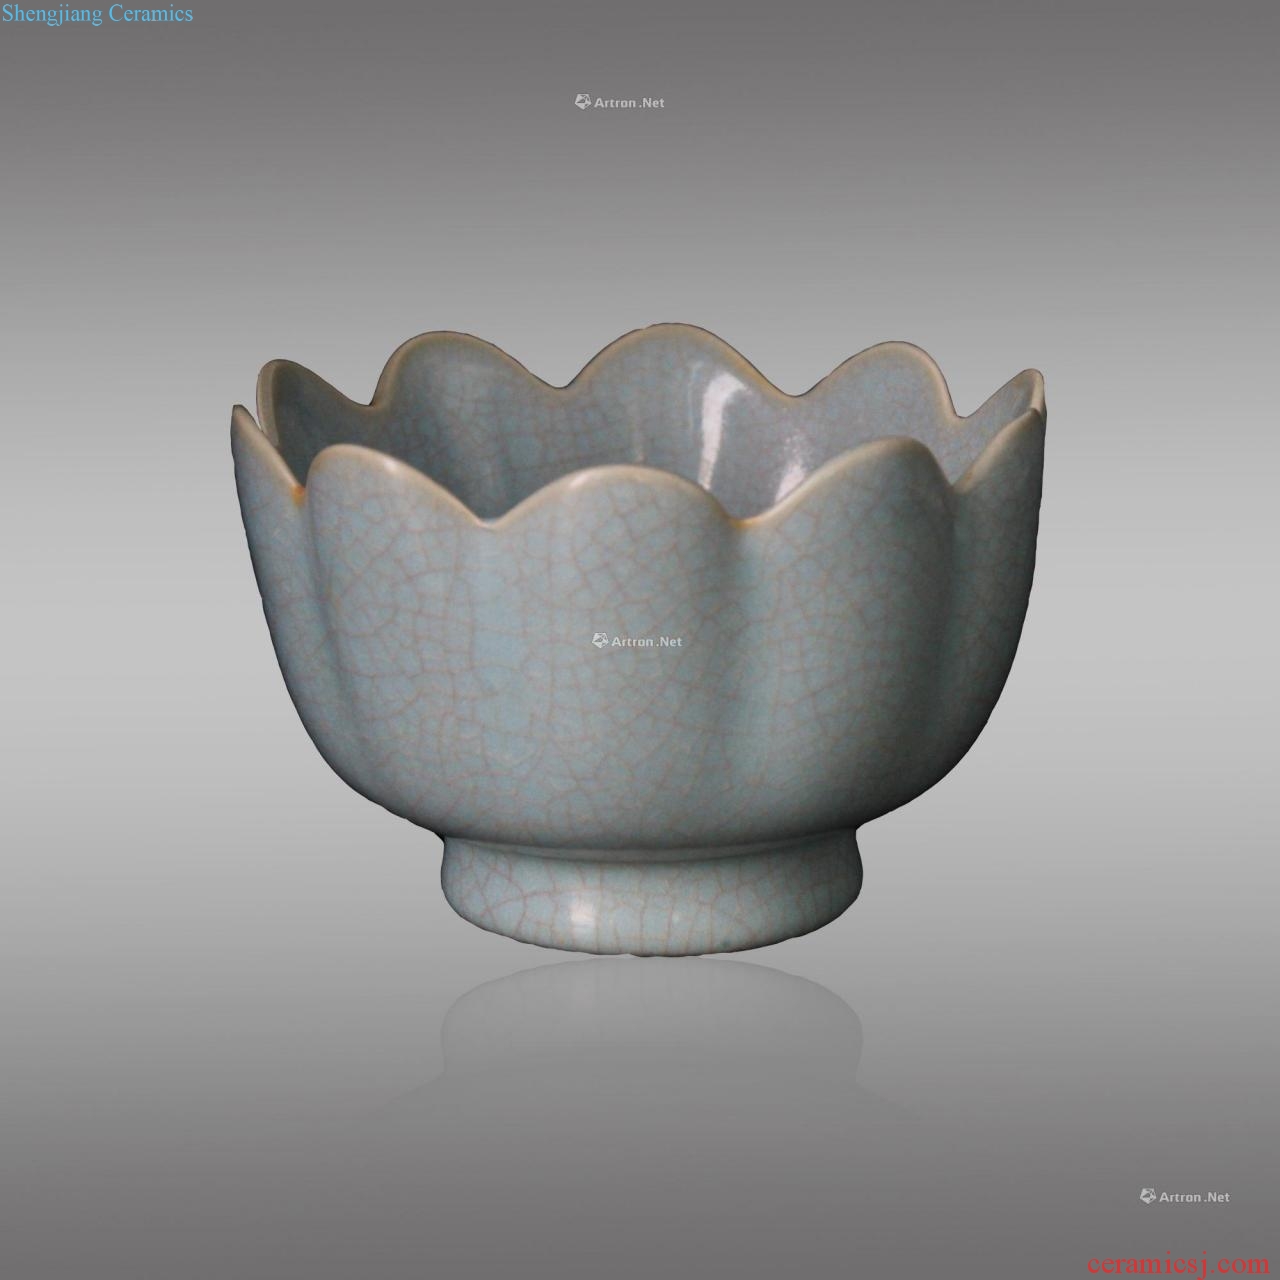 Your kiln lotus bowl